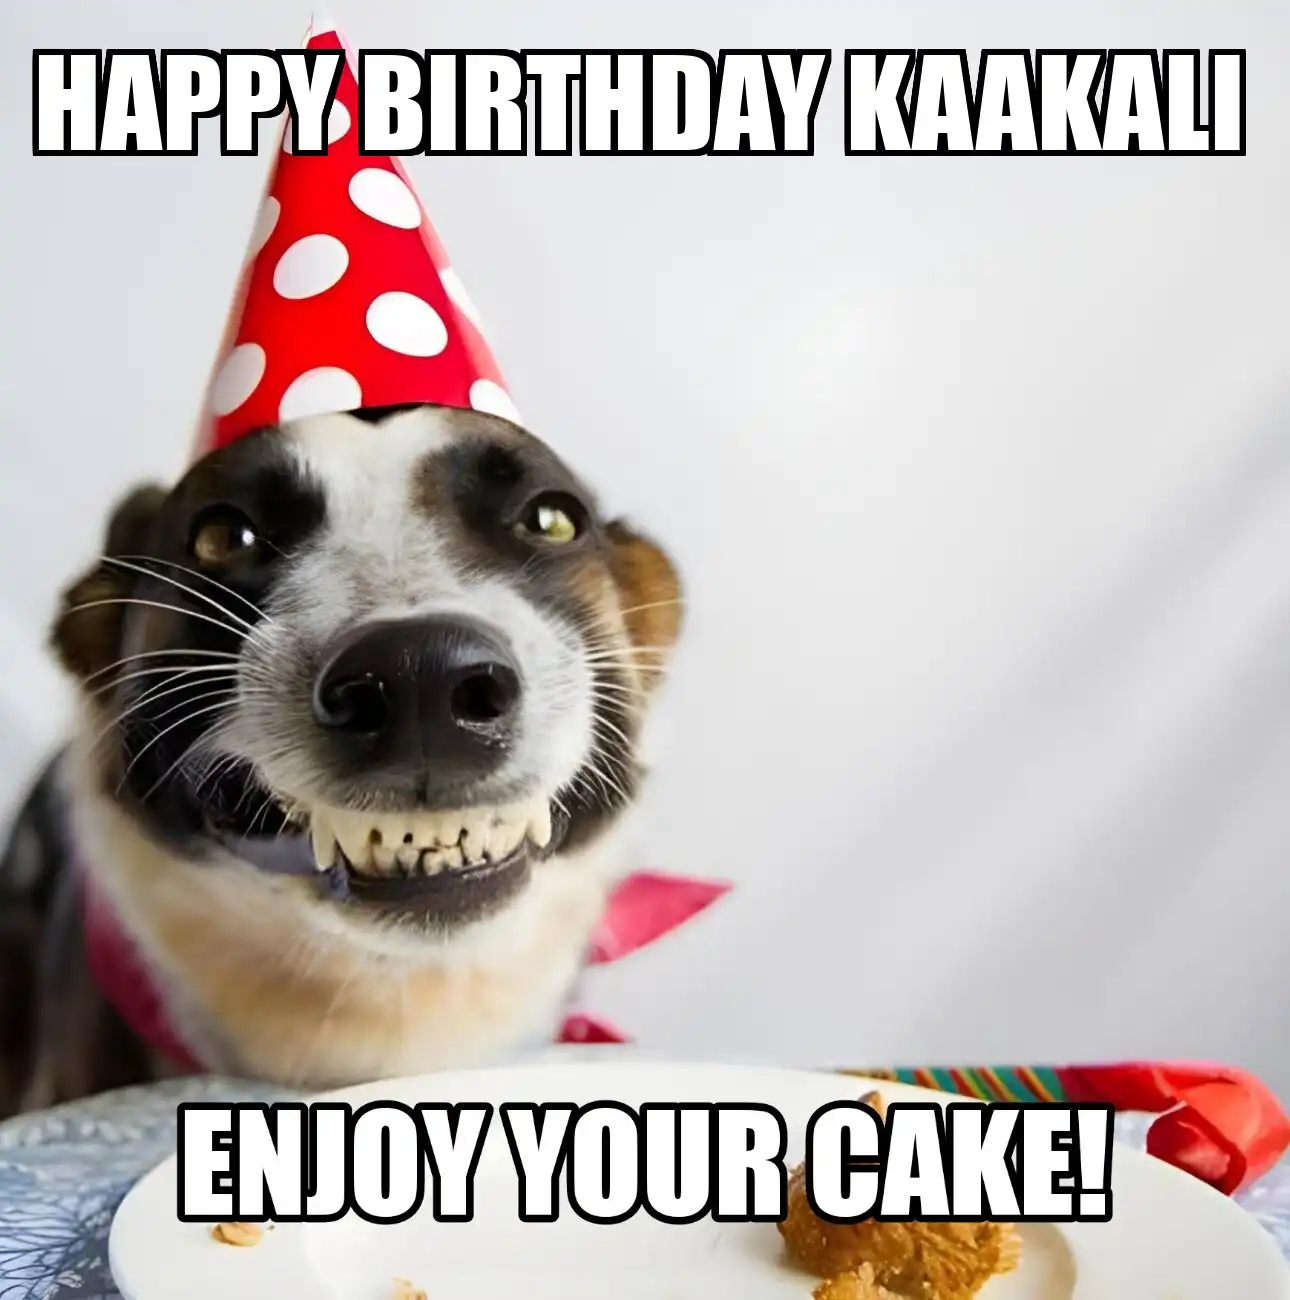 Happy Birthday Kaakali Enjoy Your Cake Dog Meme